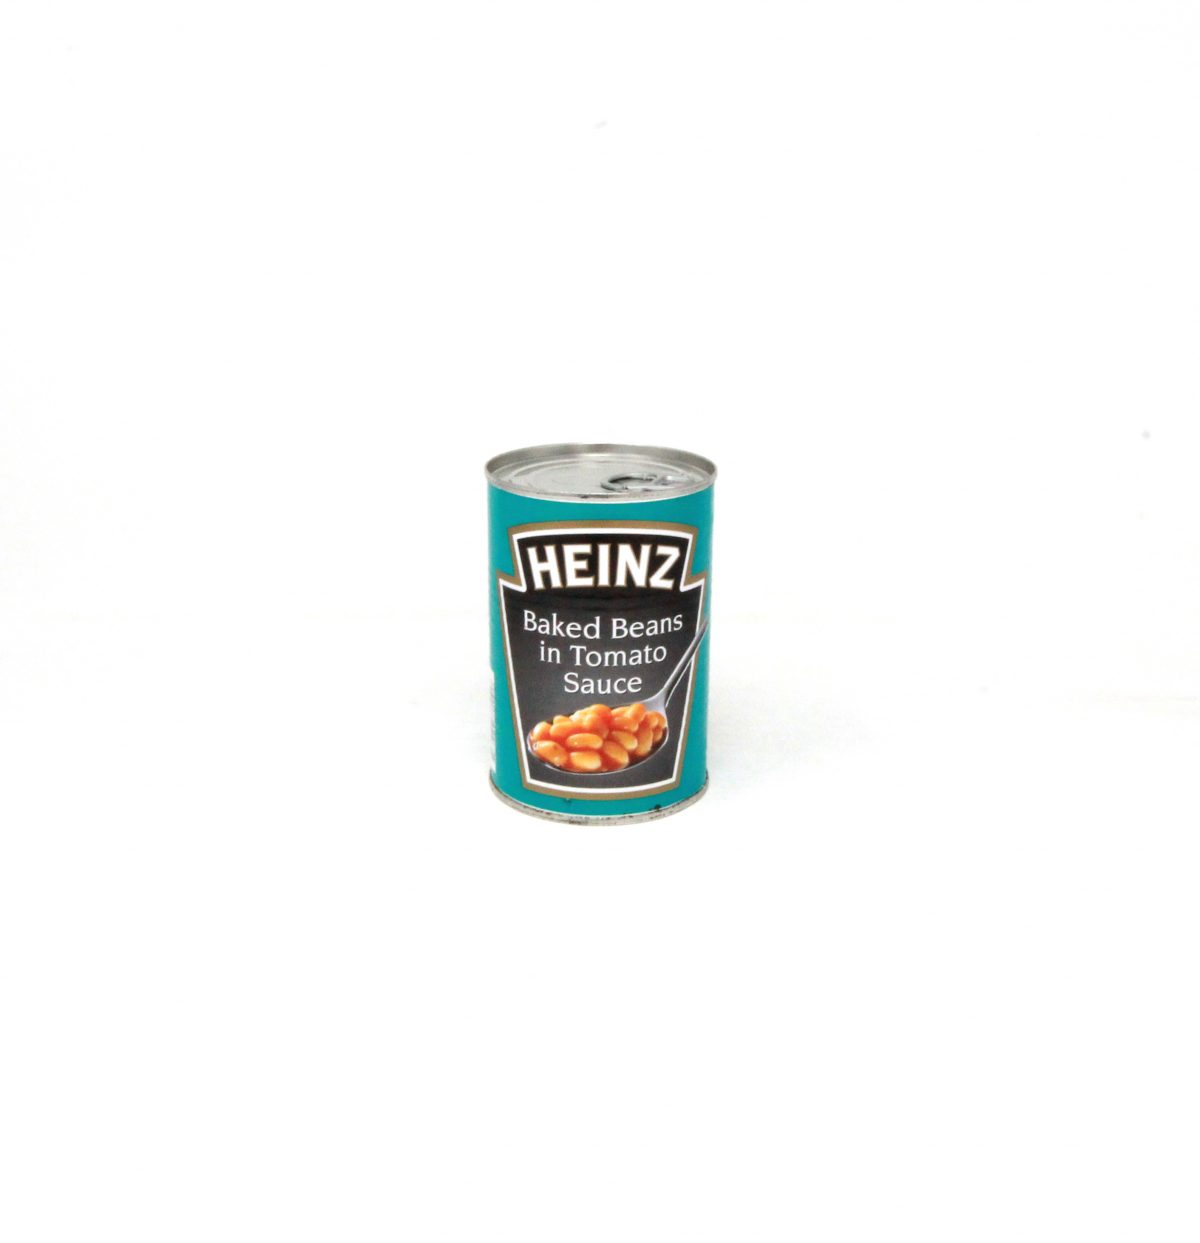 Heinz-Baked-Beans-in-Tomato-Sauce